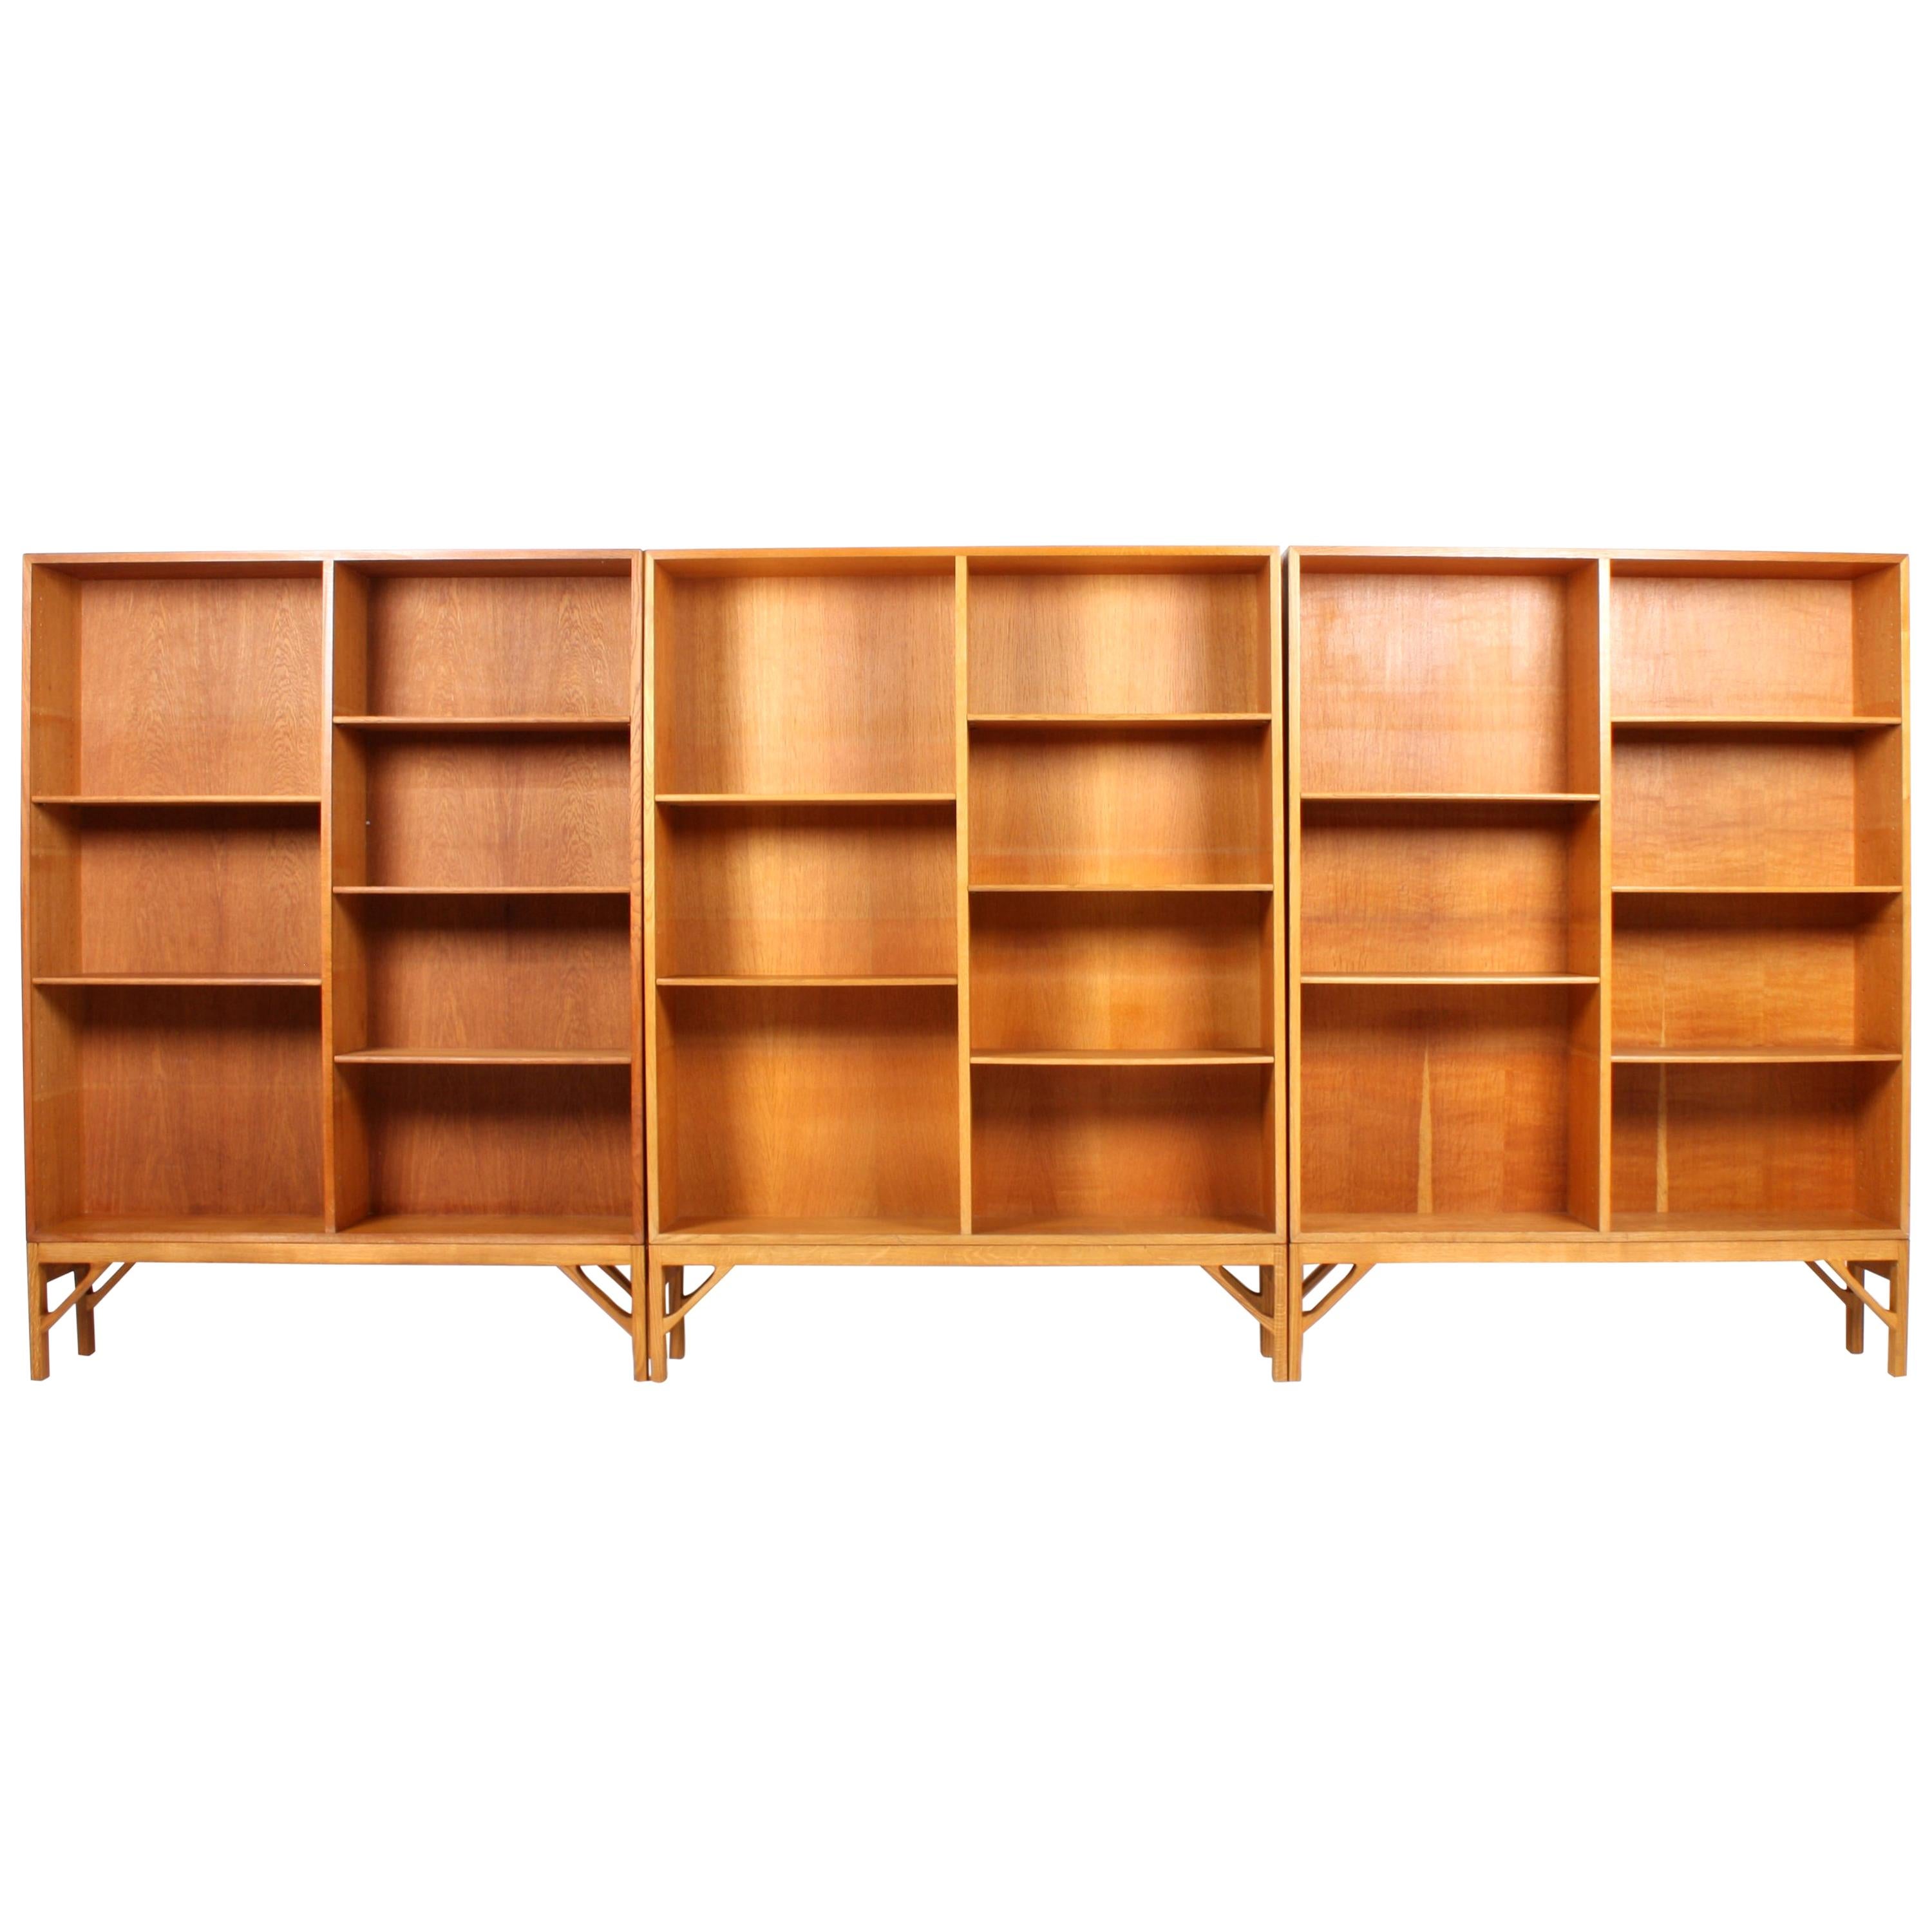 Set of Three Midcentury Bookcases in Oak by Børge Mogensen, Made in Denmark